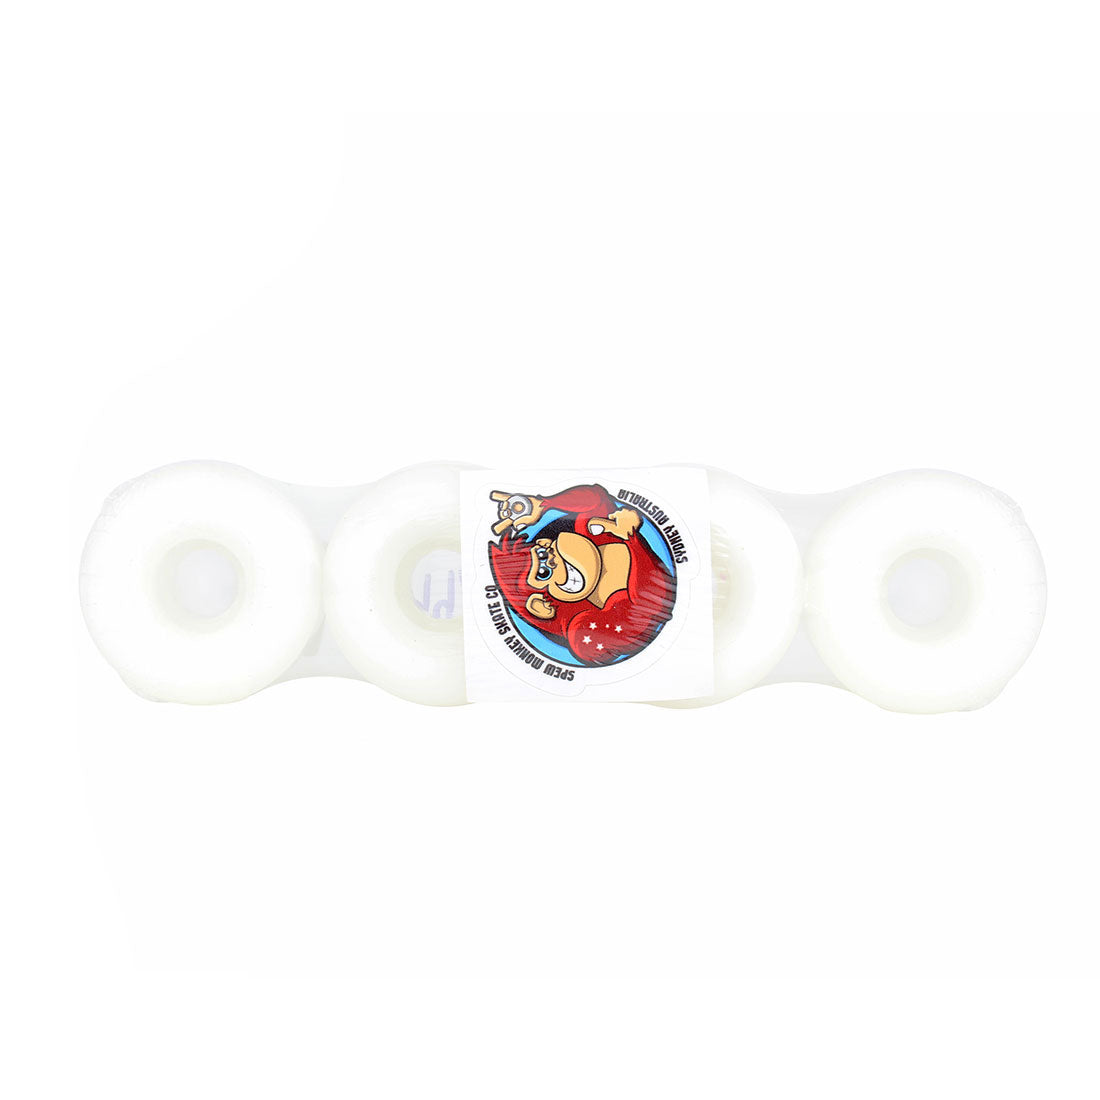 Spew Monkey #1s 54mm 99a Classic Wheels 4pk - Natural White Skateboard Wheels